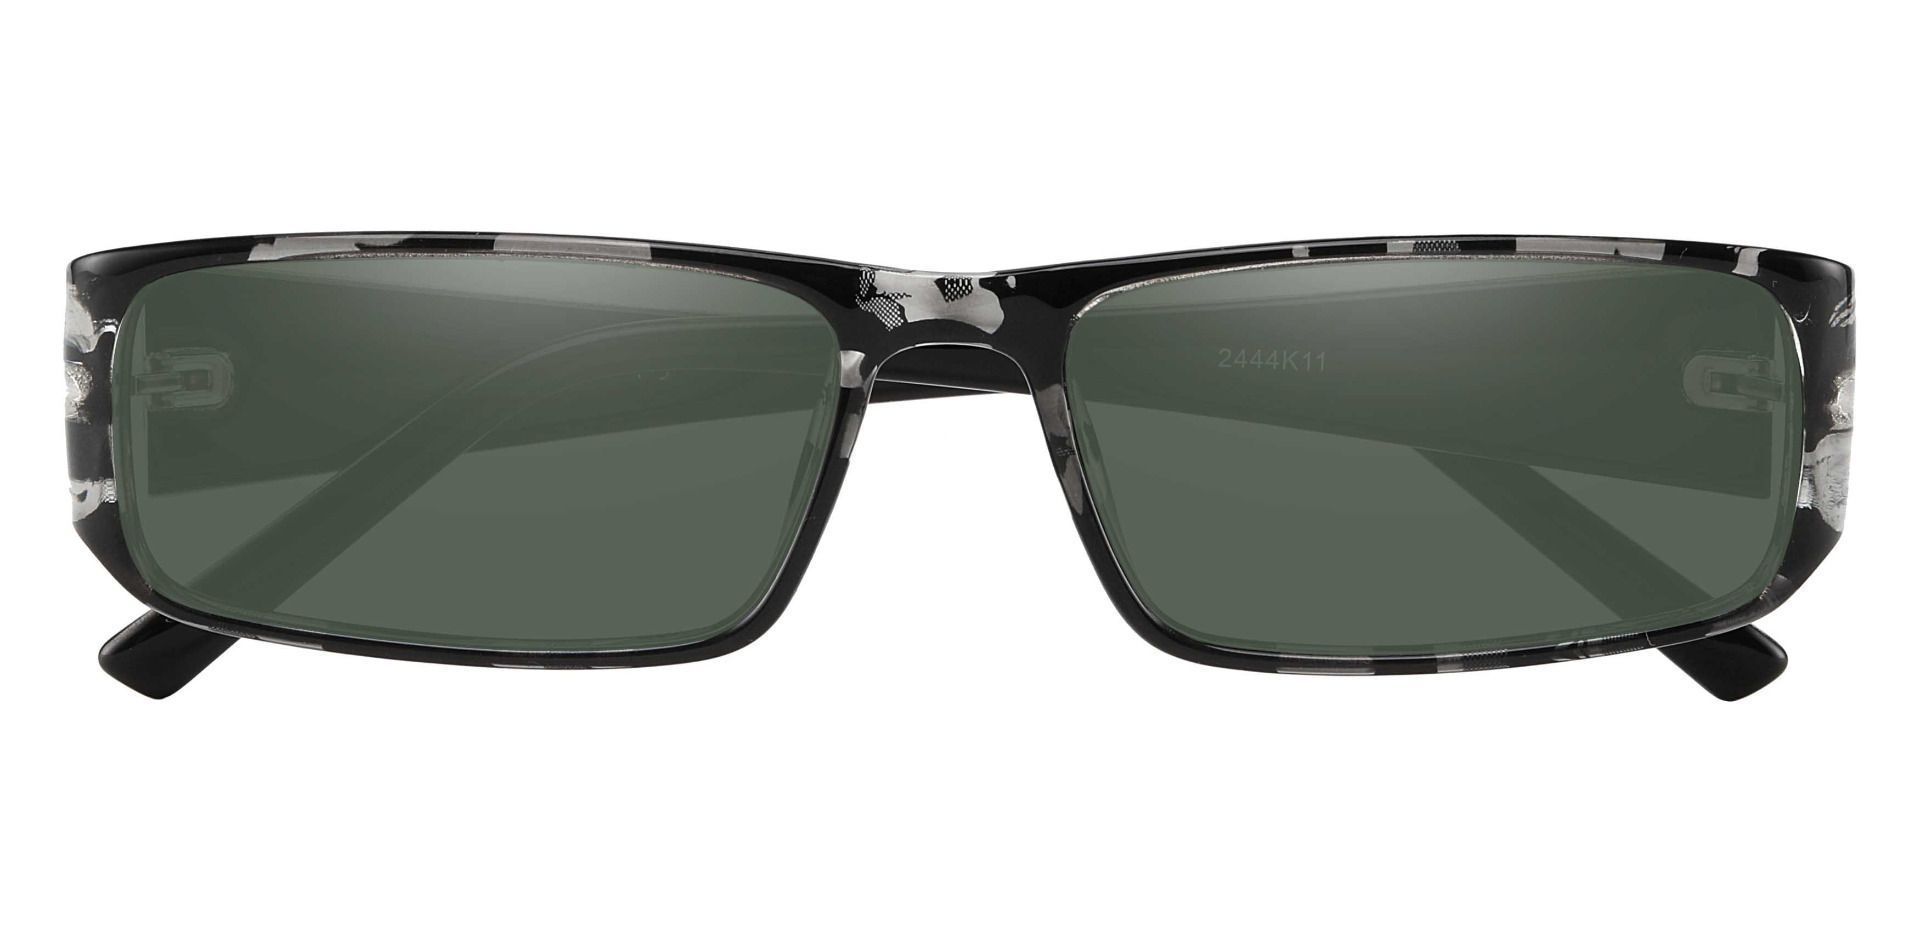 Elbert Rectangle Reading Sunglasses - Black Frame With Green Lenses